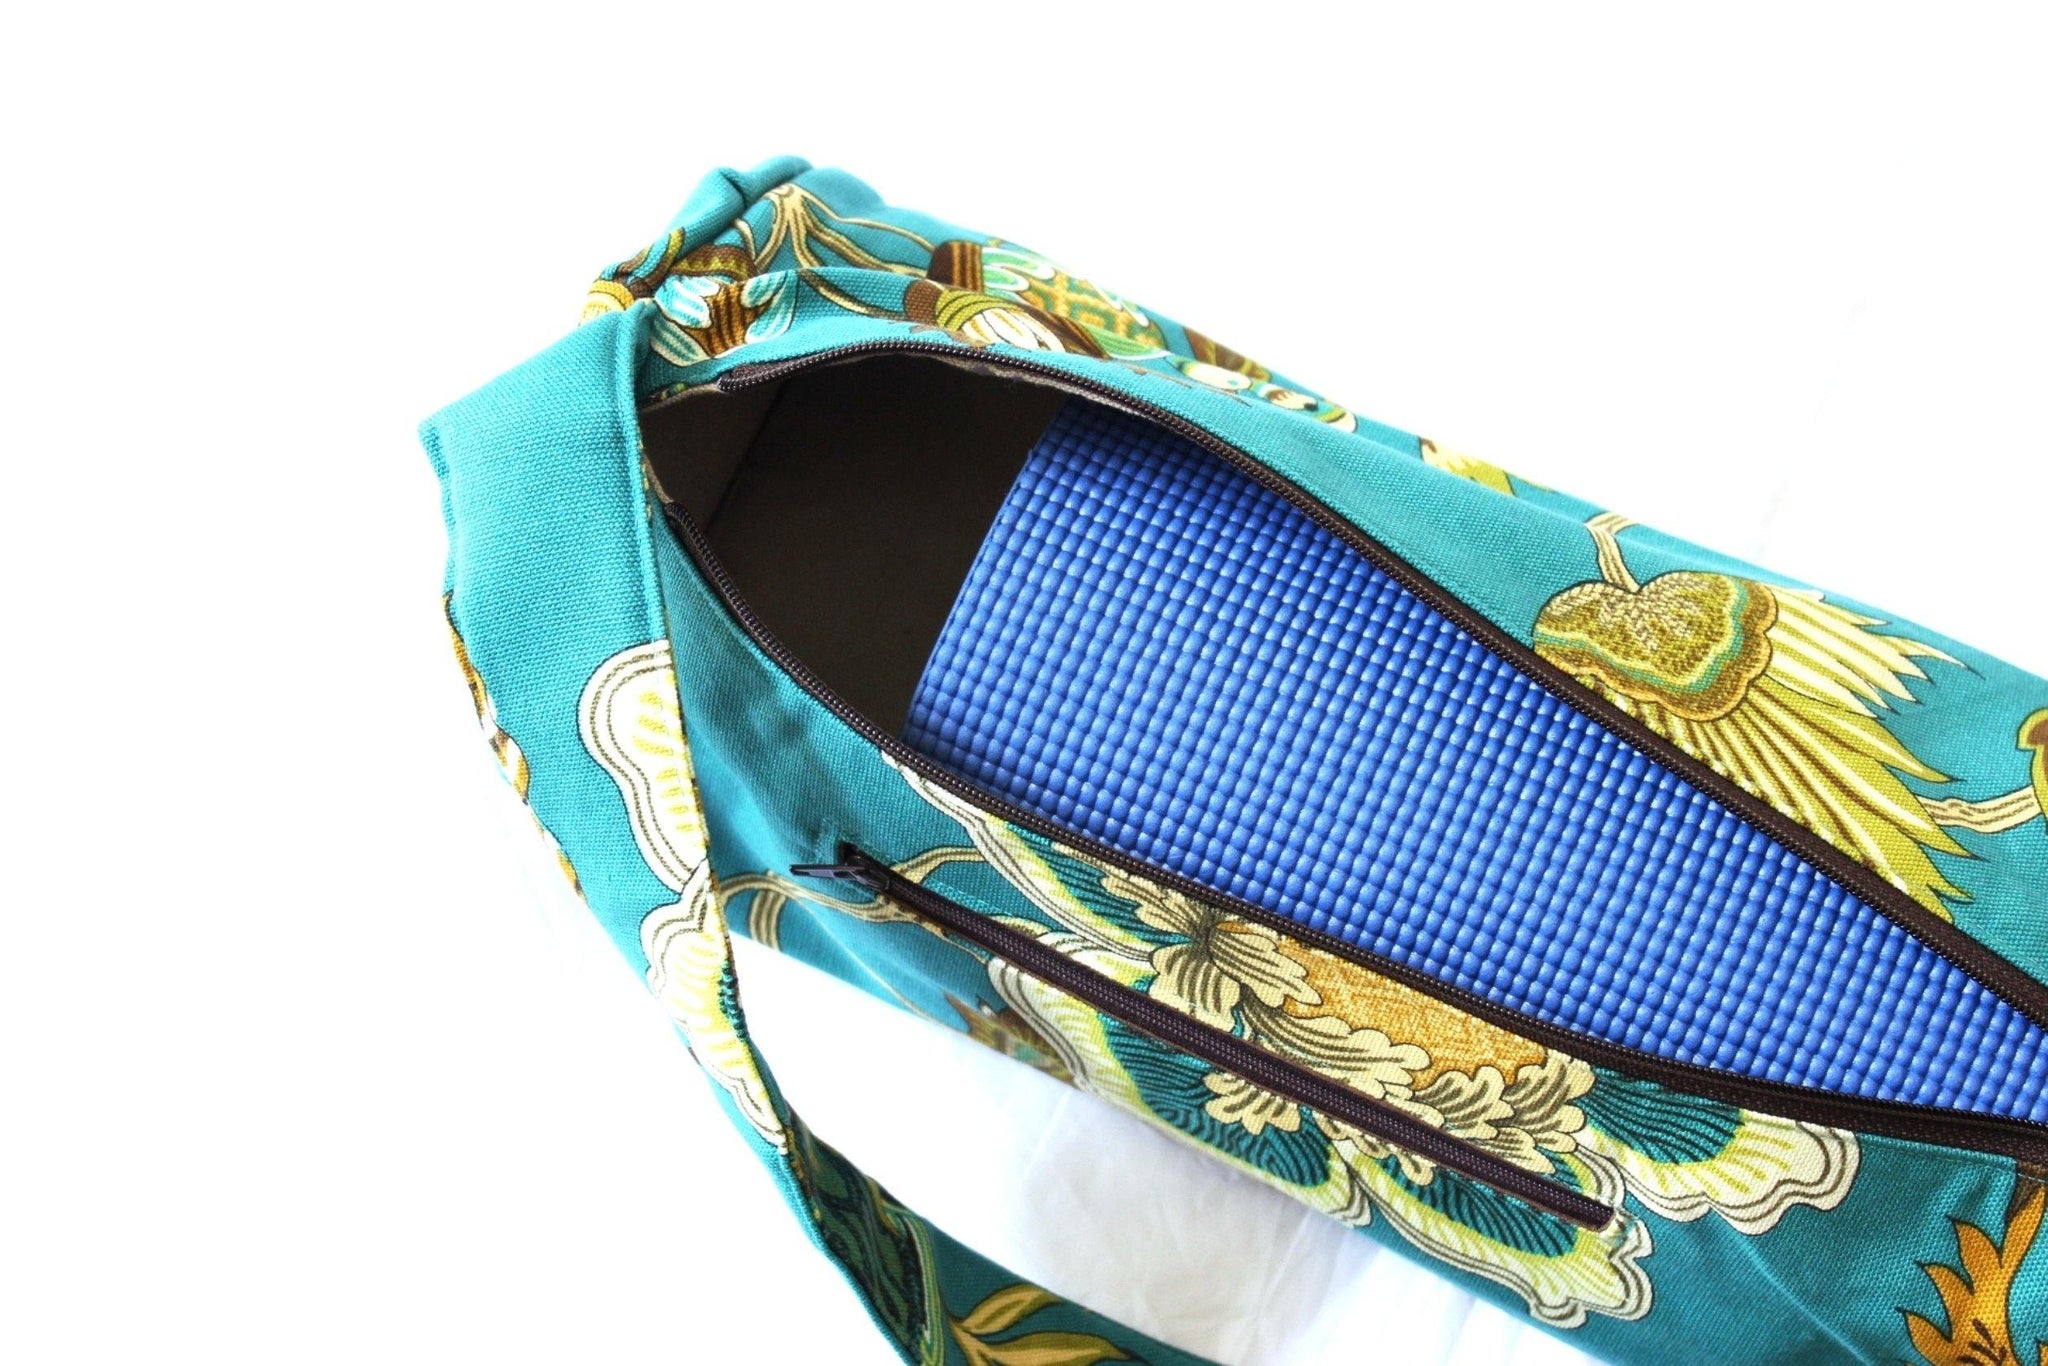 Handmade Yoga mat bag with zipper - teal floral fabric – Tracey Lipman